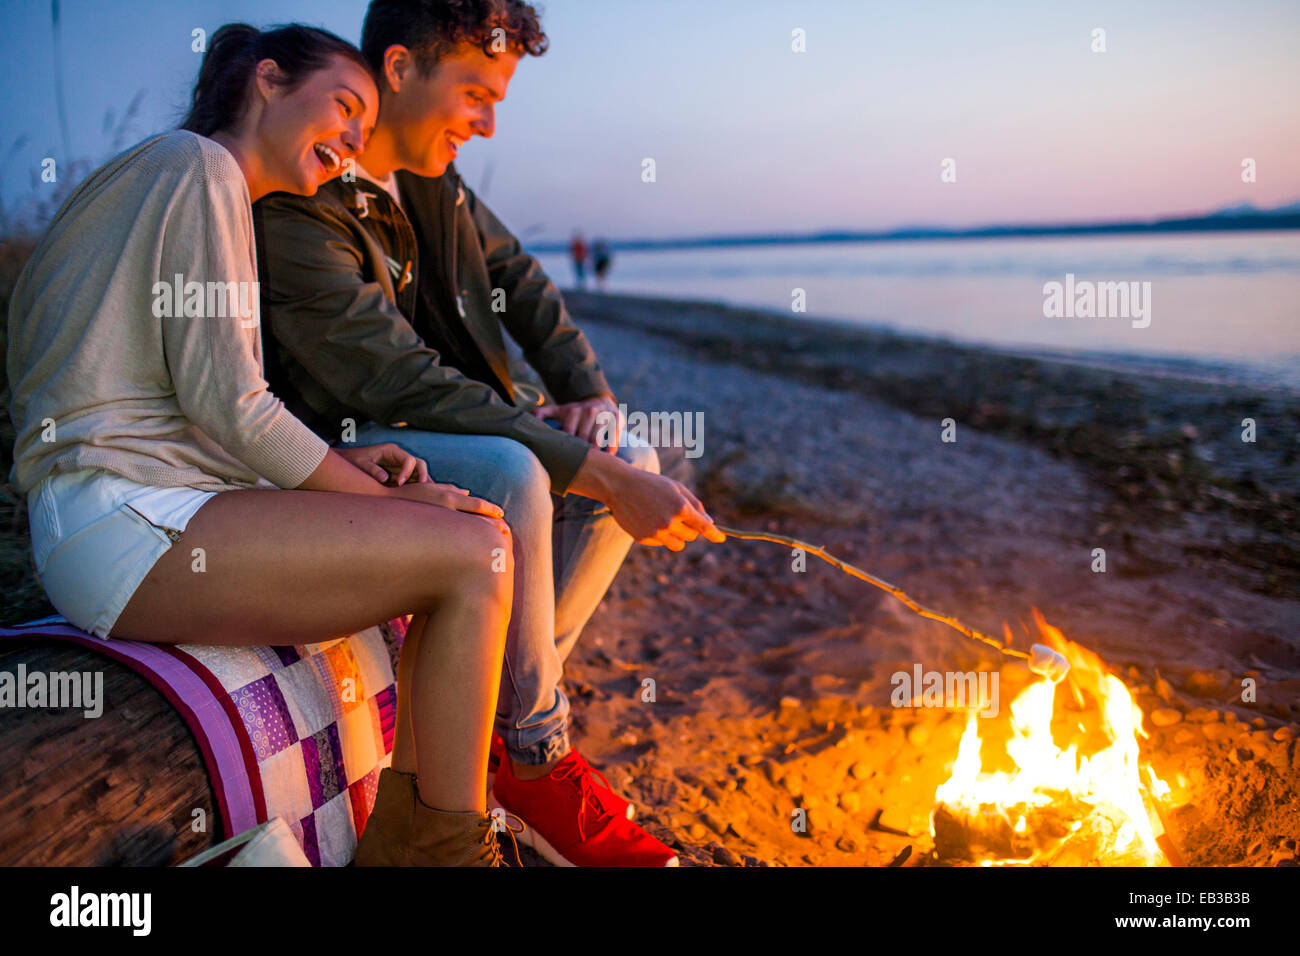 Caucasian couple roasting marshmallows on fire at beach Stock Photo